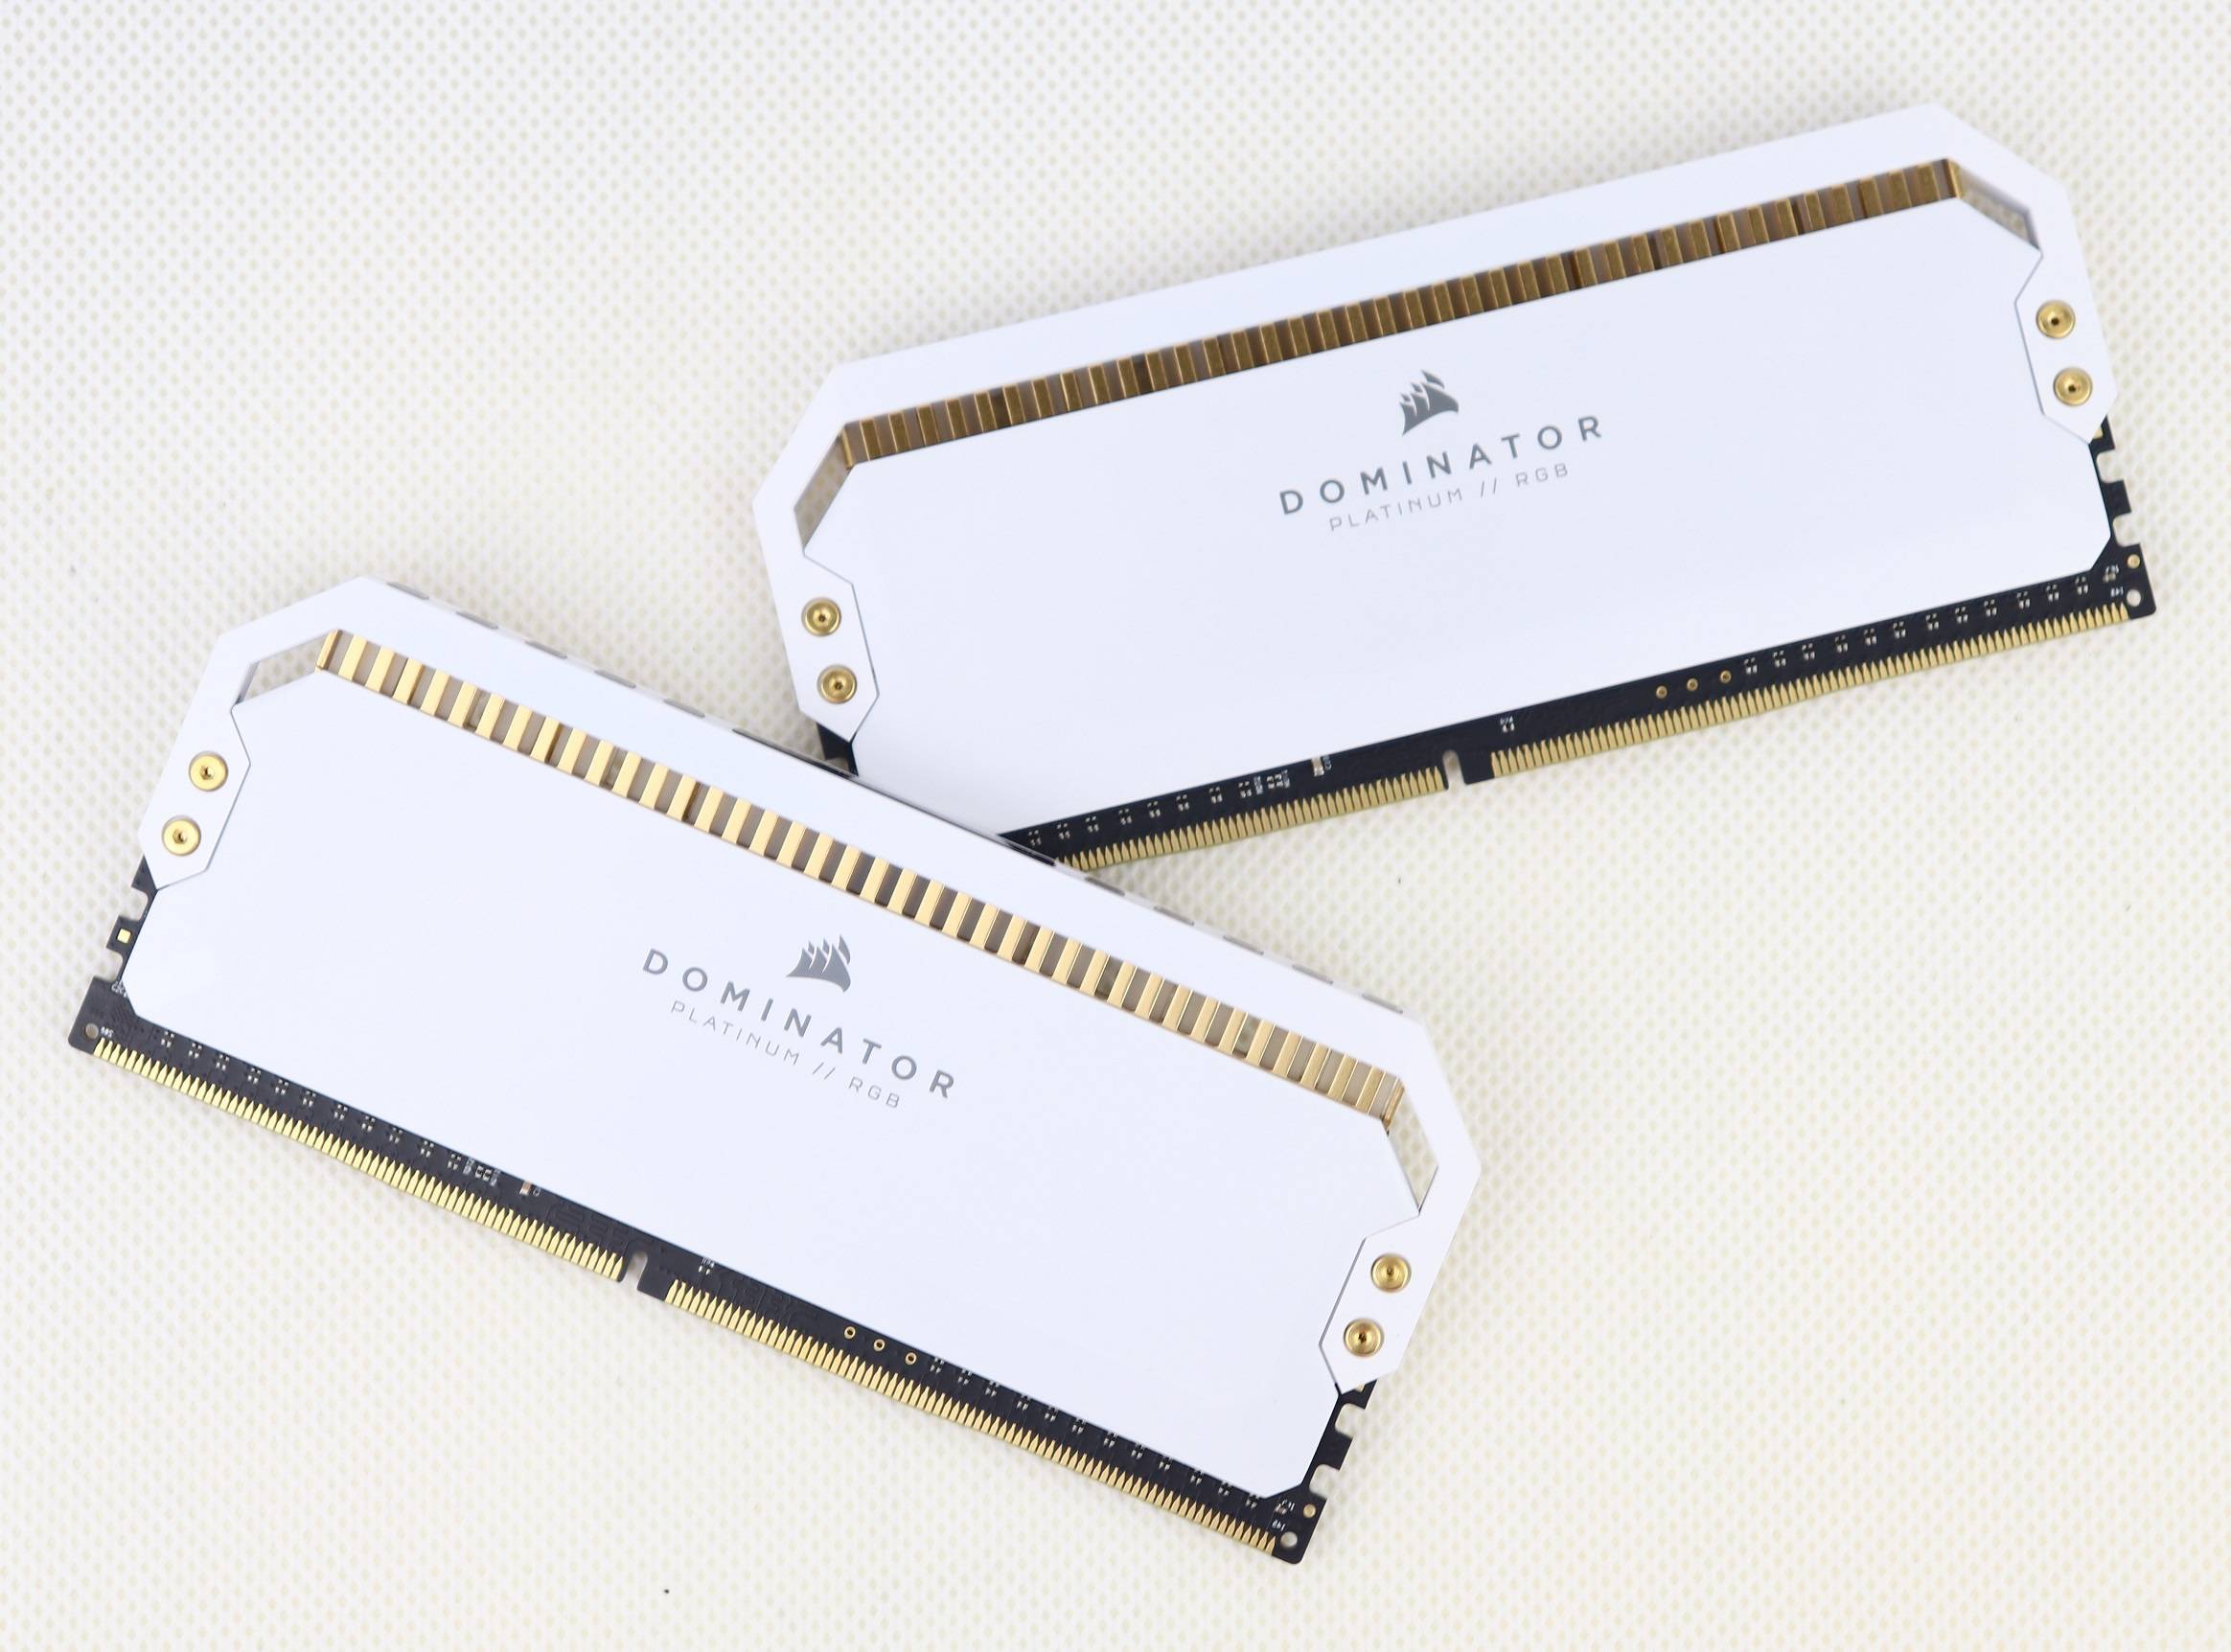 Corsair Dominator Platinum RGB DDR4記憶體